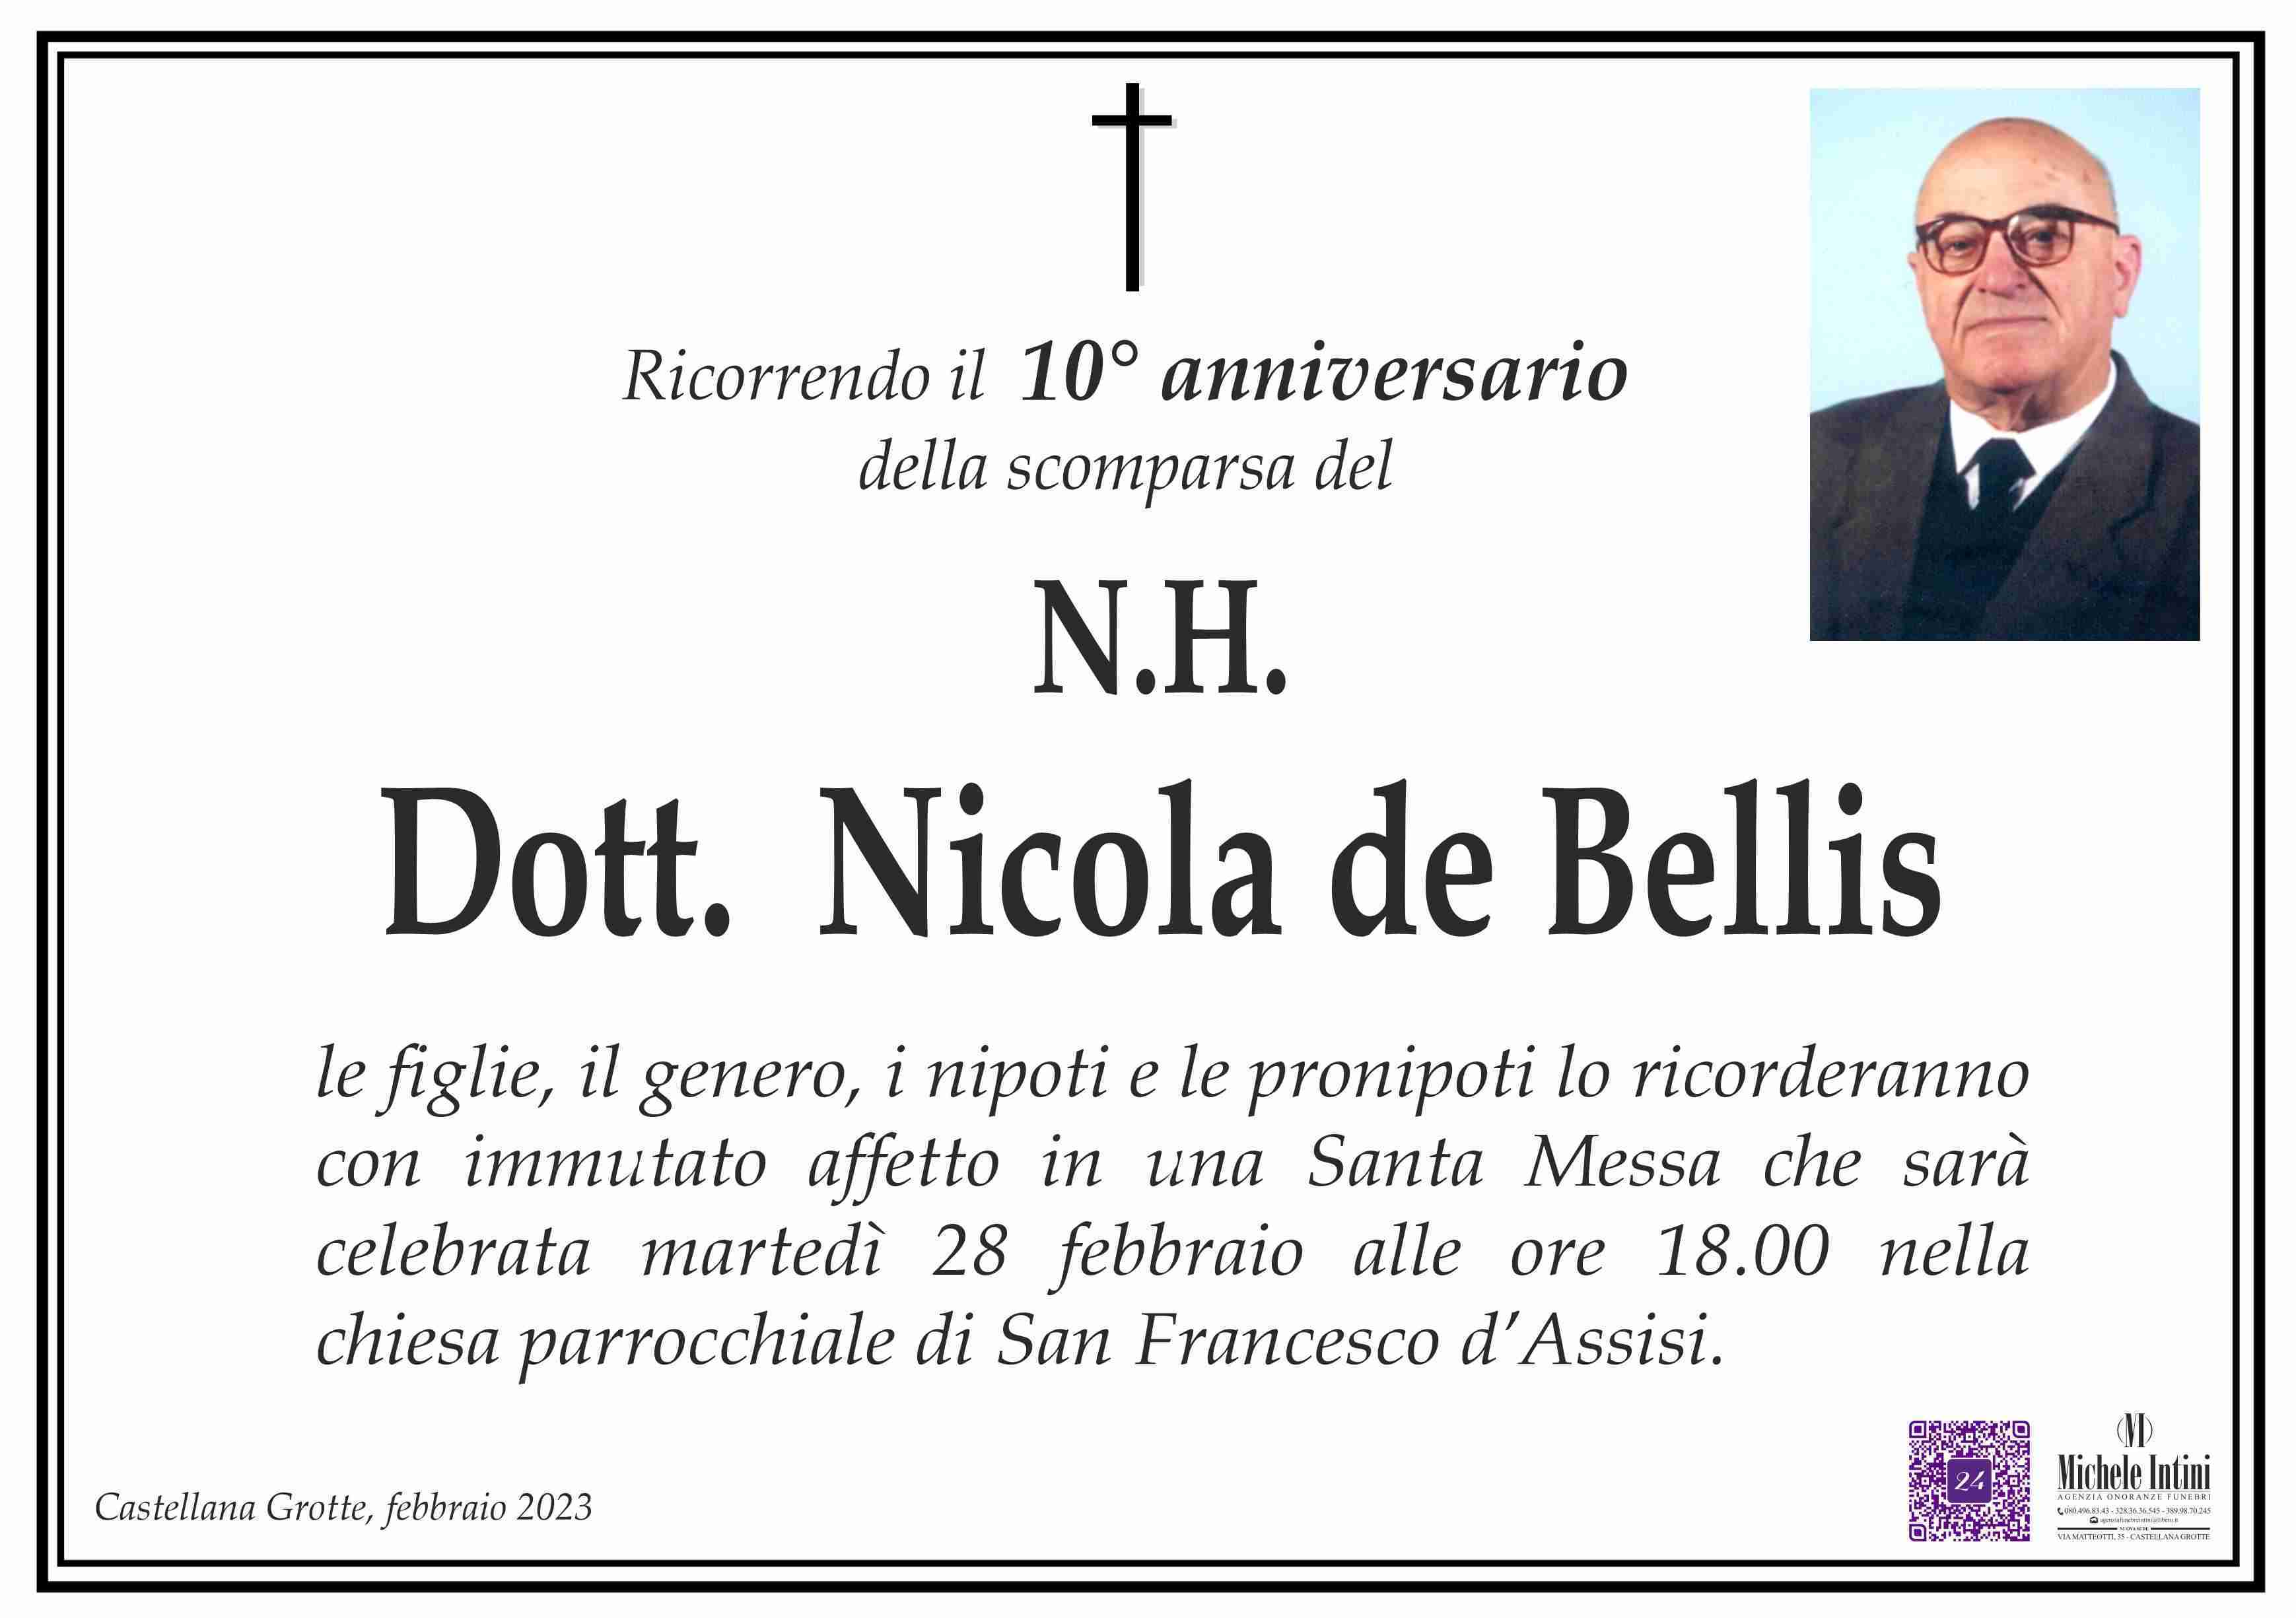 Nicola de Bellis